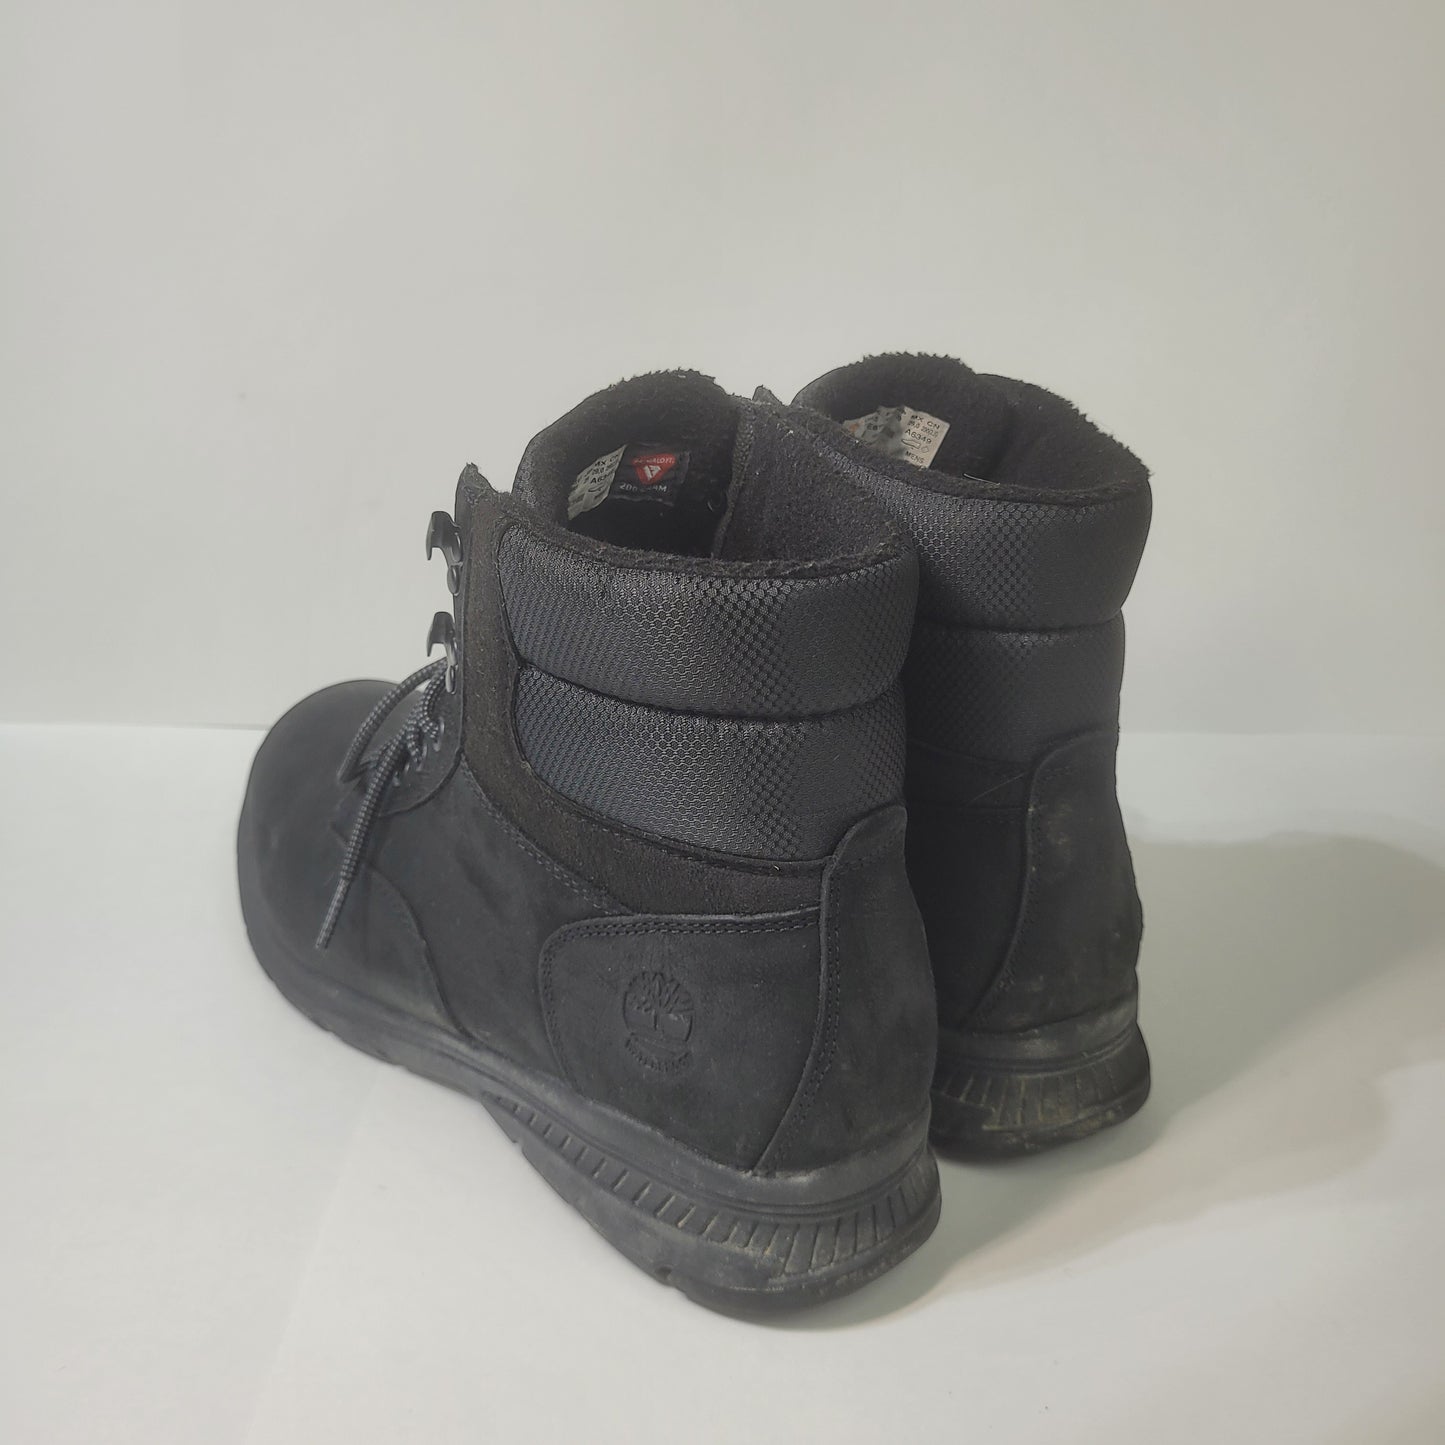 Timberland Waterproof Men's Work Boots Black - Size 11